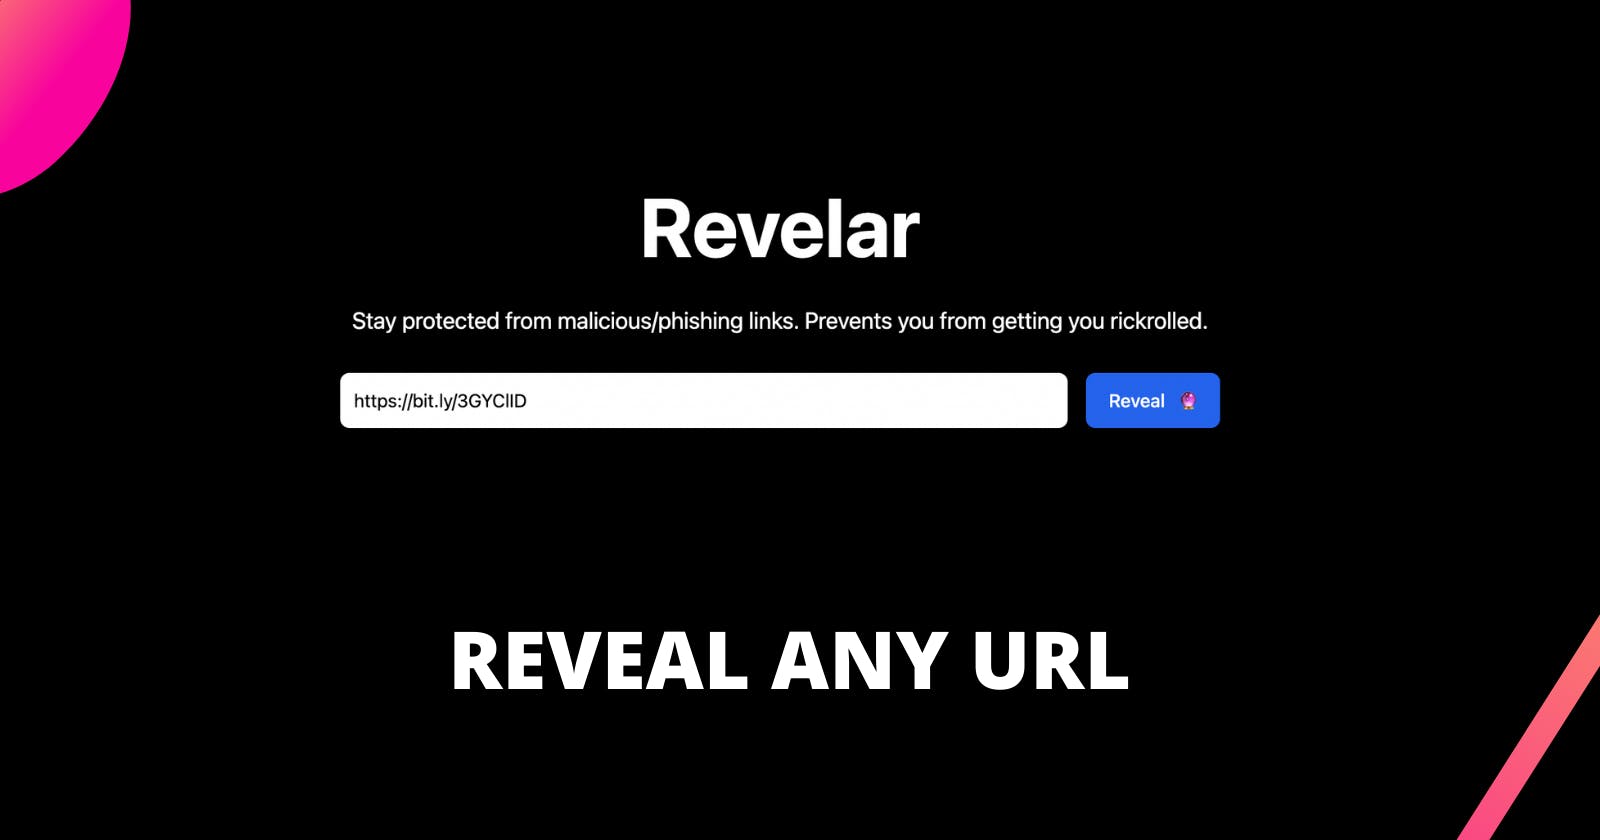 Introducing Revelar - URL Revealer